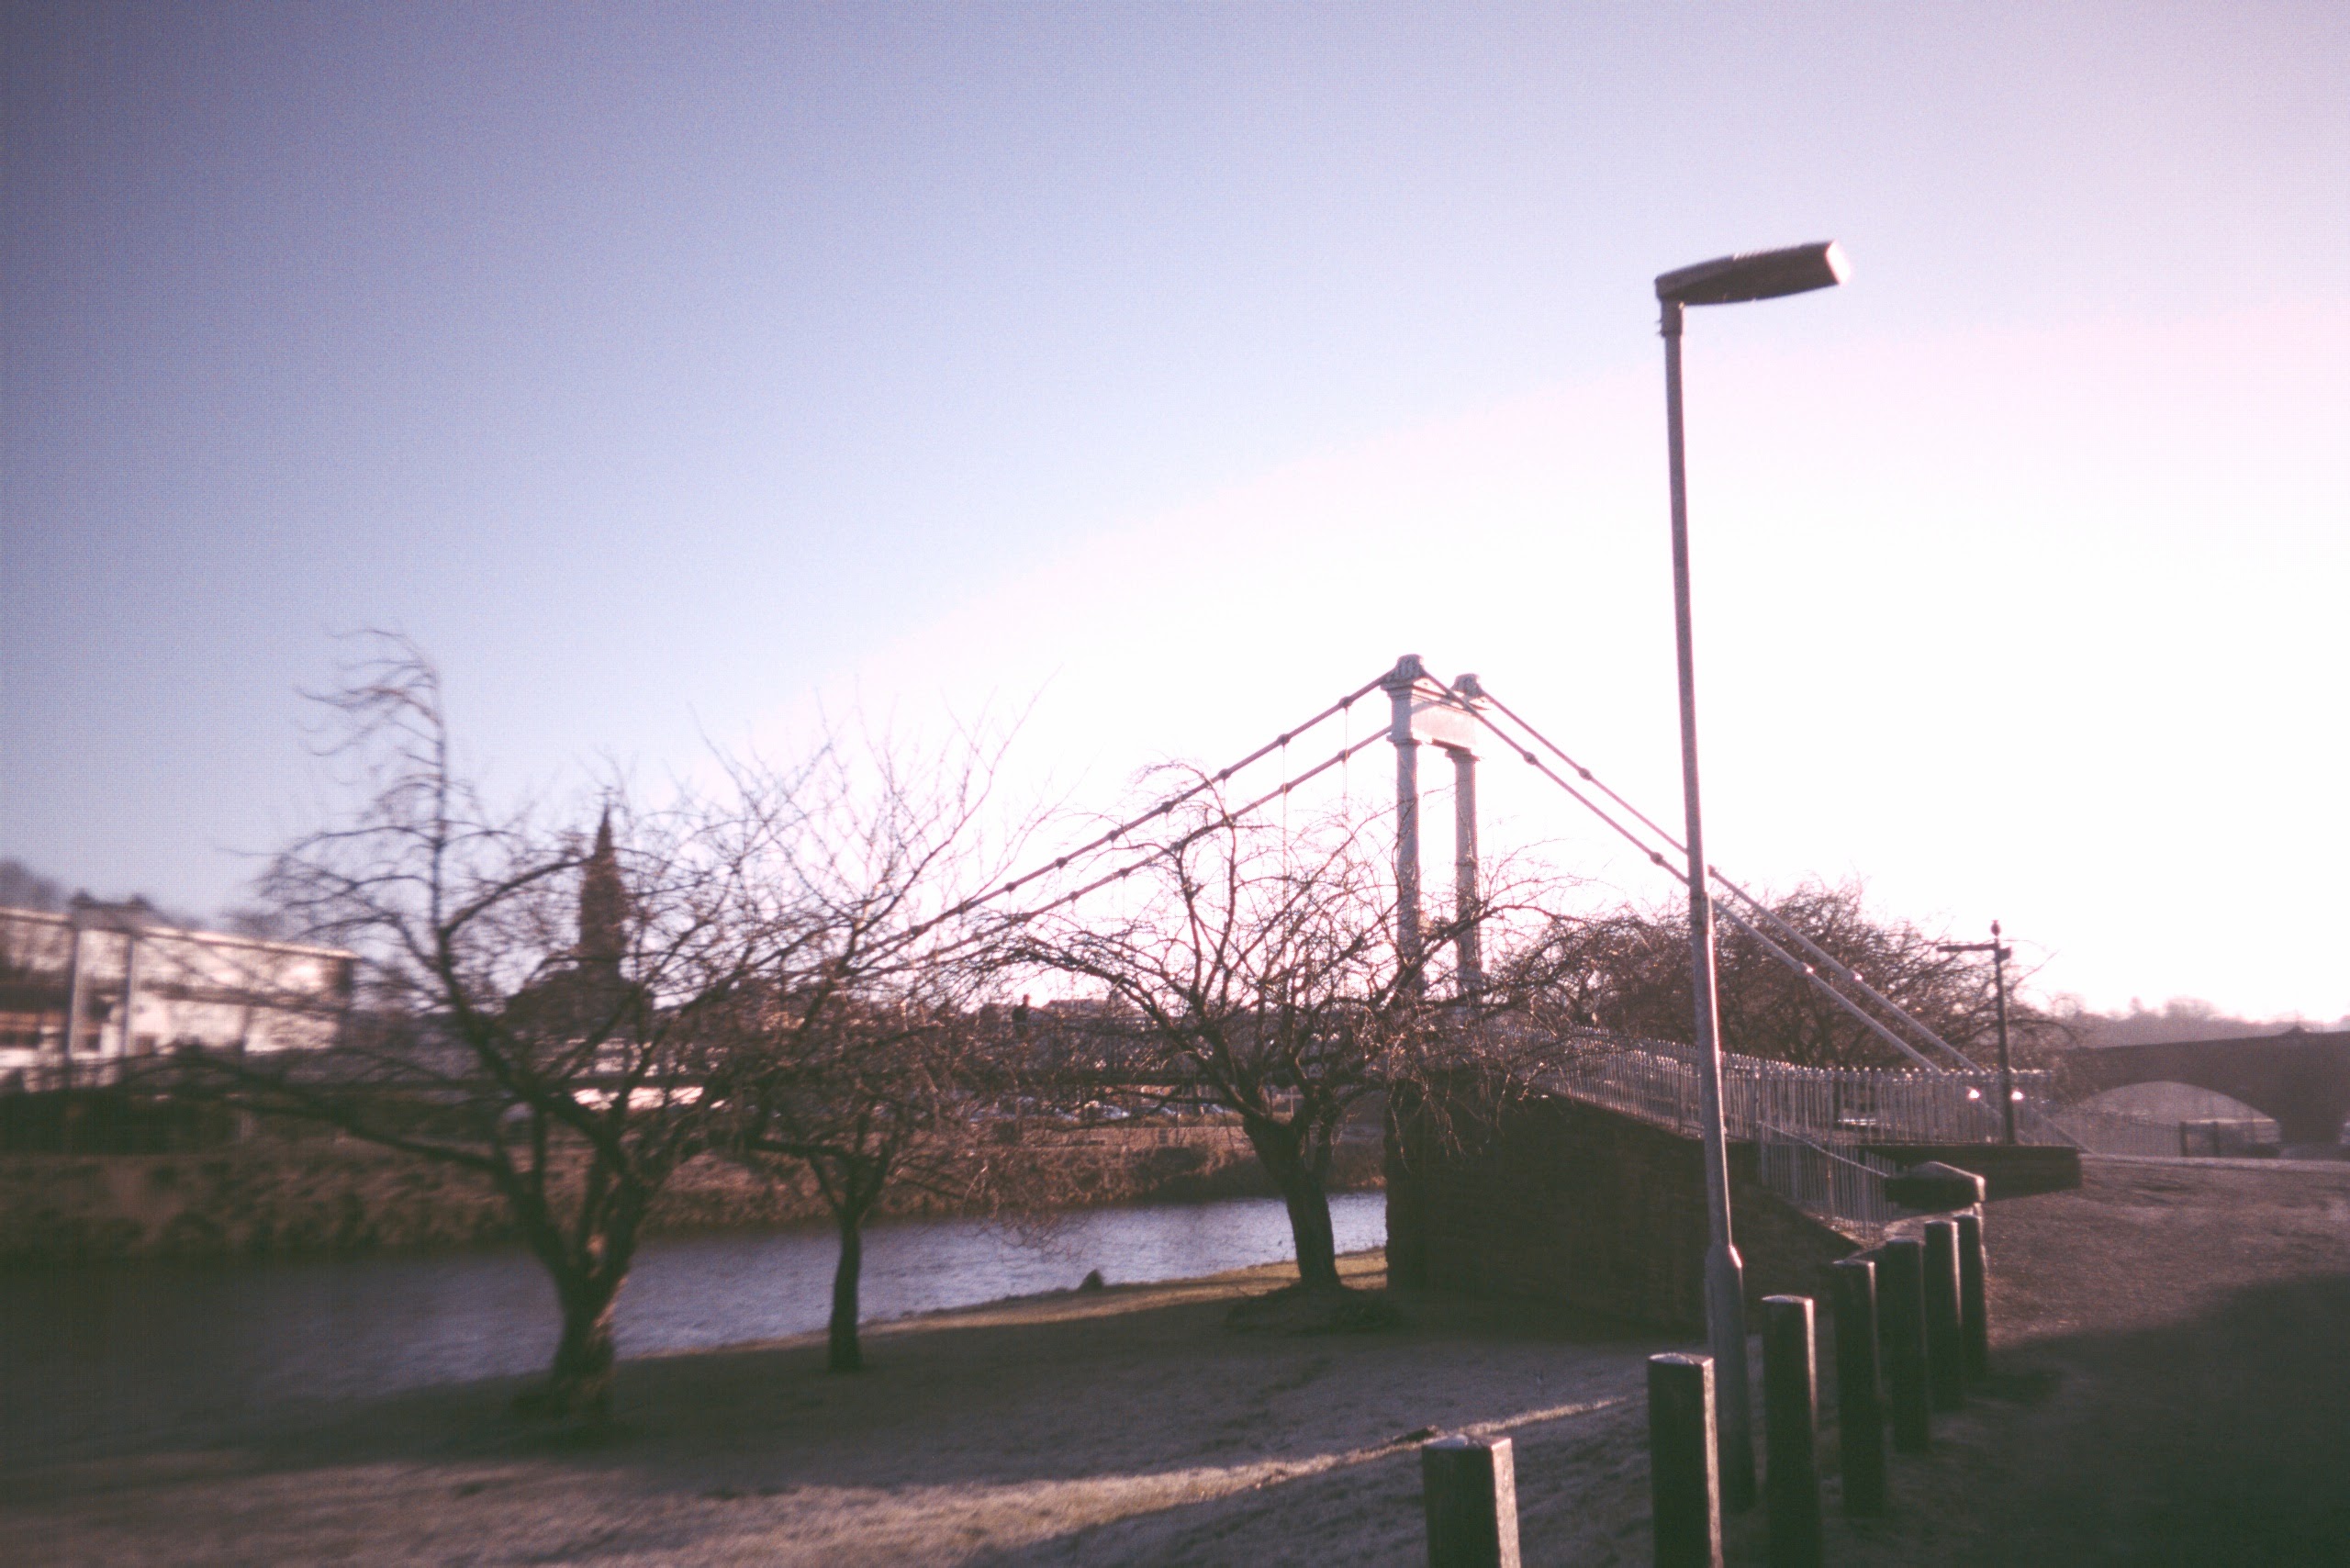 Flashback shot of Suspension Bridge using flashbackclassic "film"